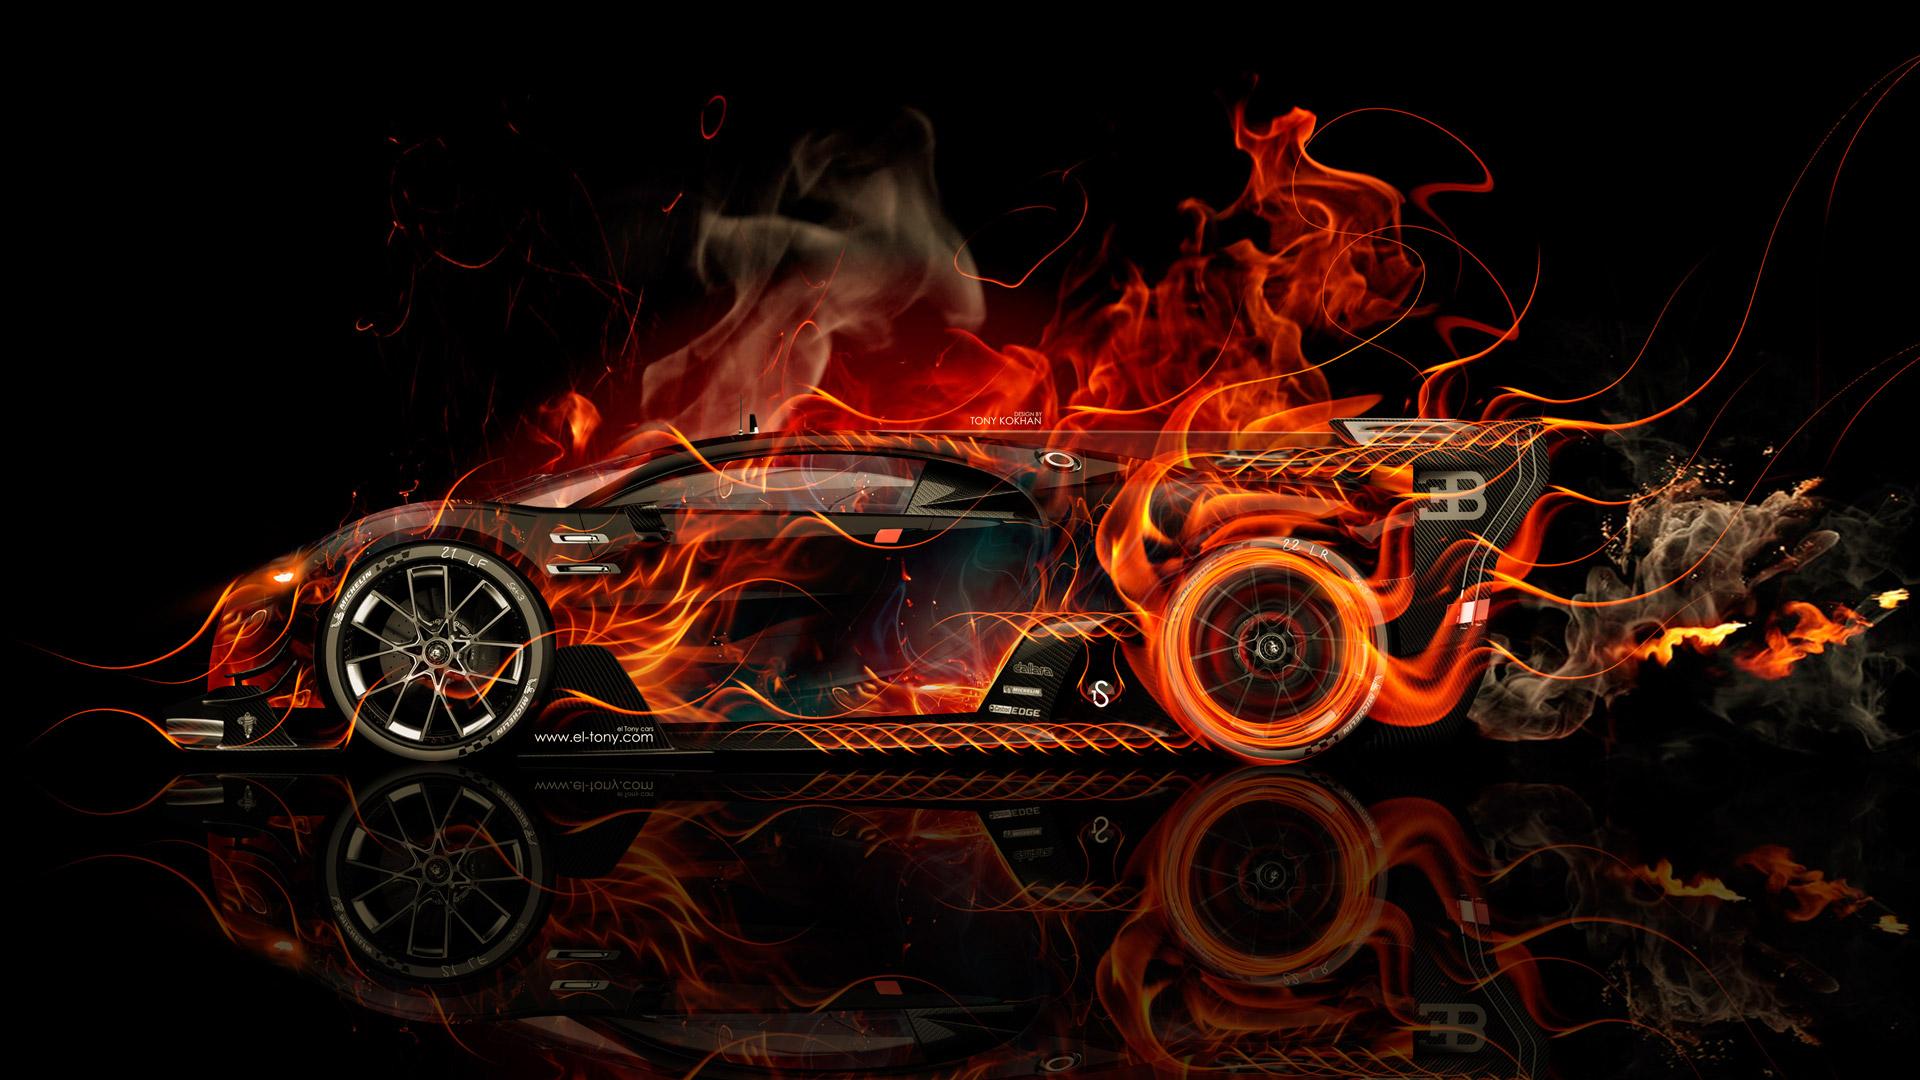 Bugatti Fire Wallpapers - Top Free Bugatti Fire Backgrounds ...